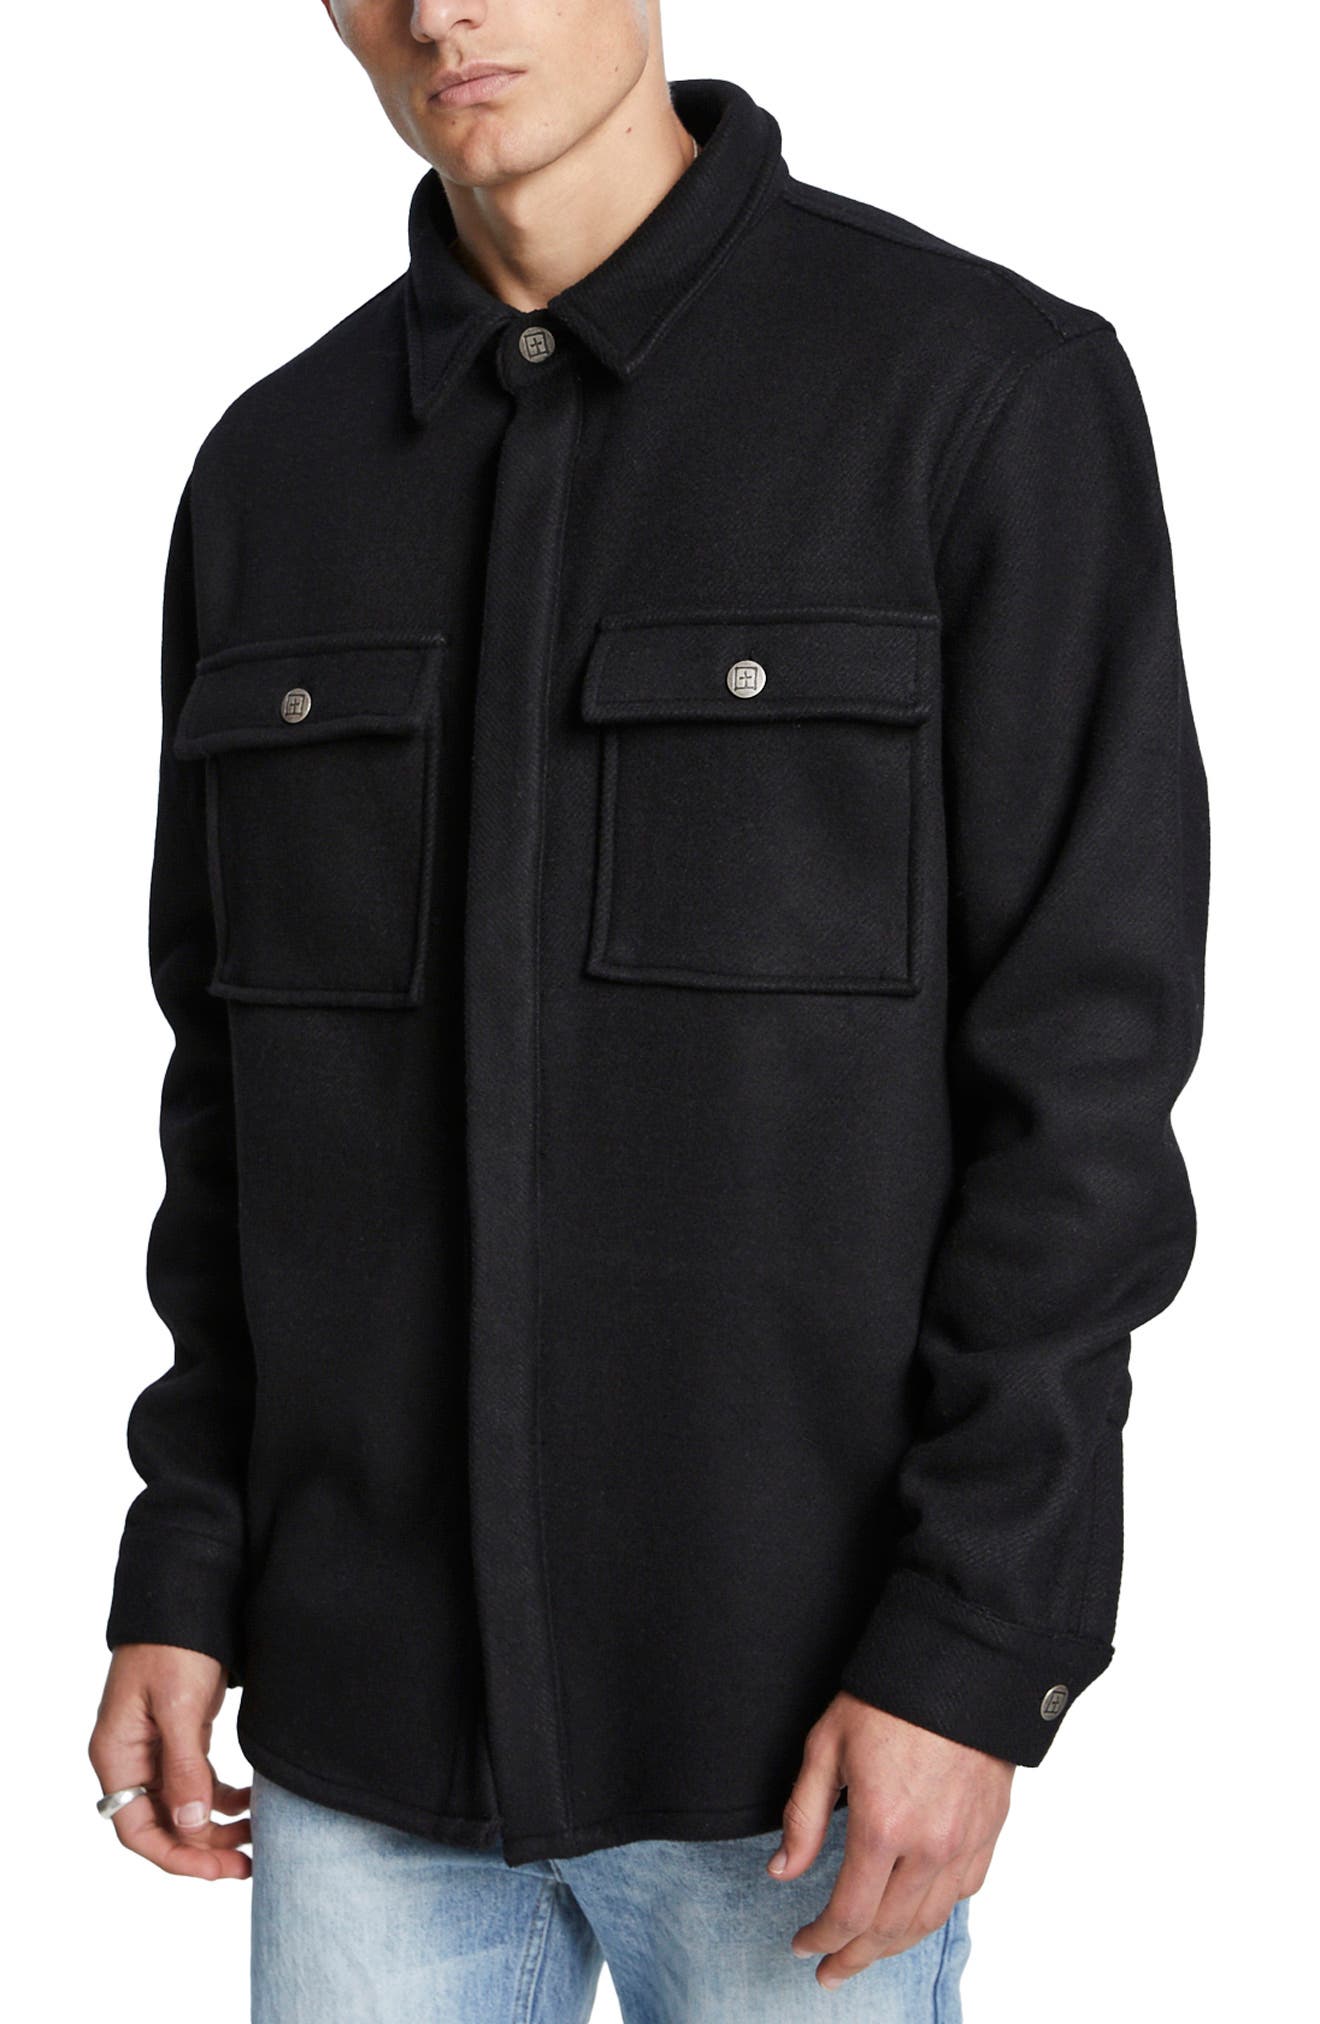 Ksubi Hi-Fi Wool Button-Up Shirt in Black at Nordstrom, Size Small